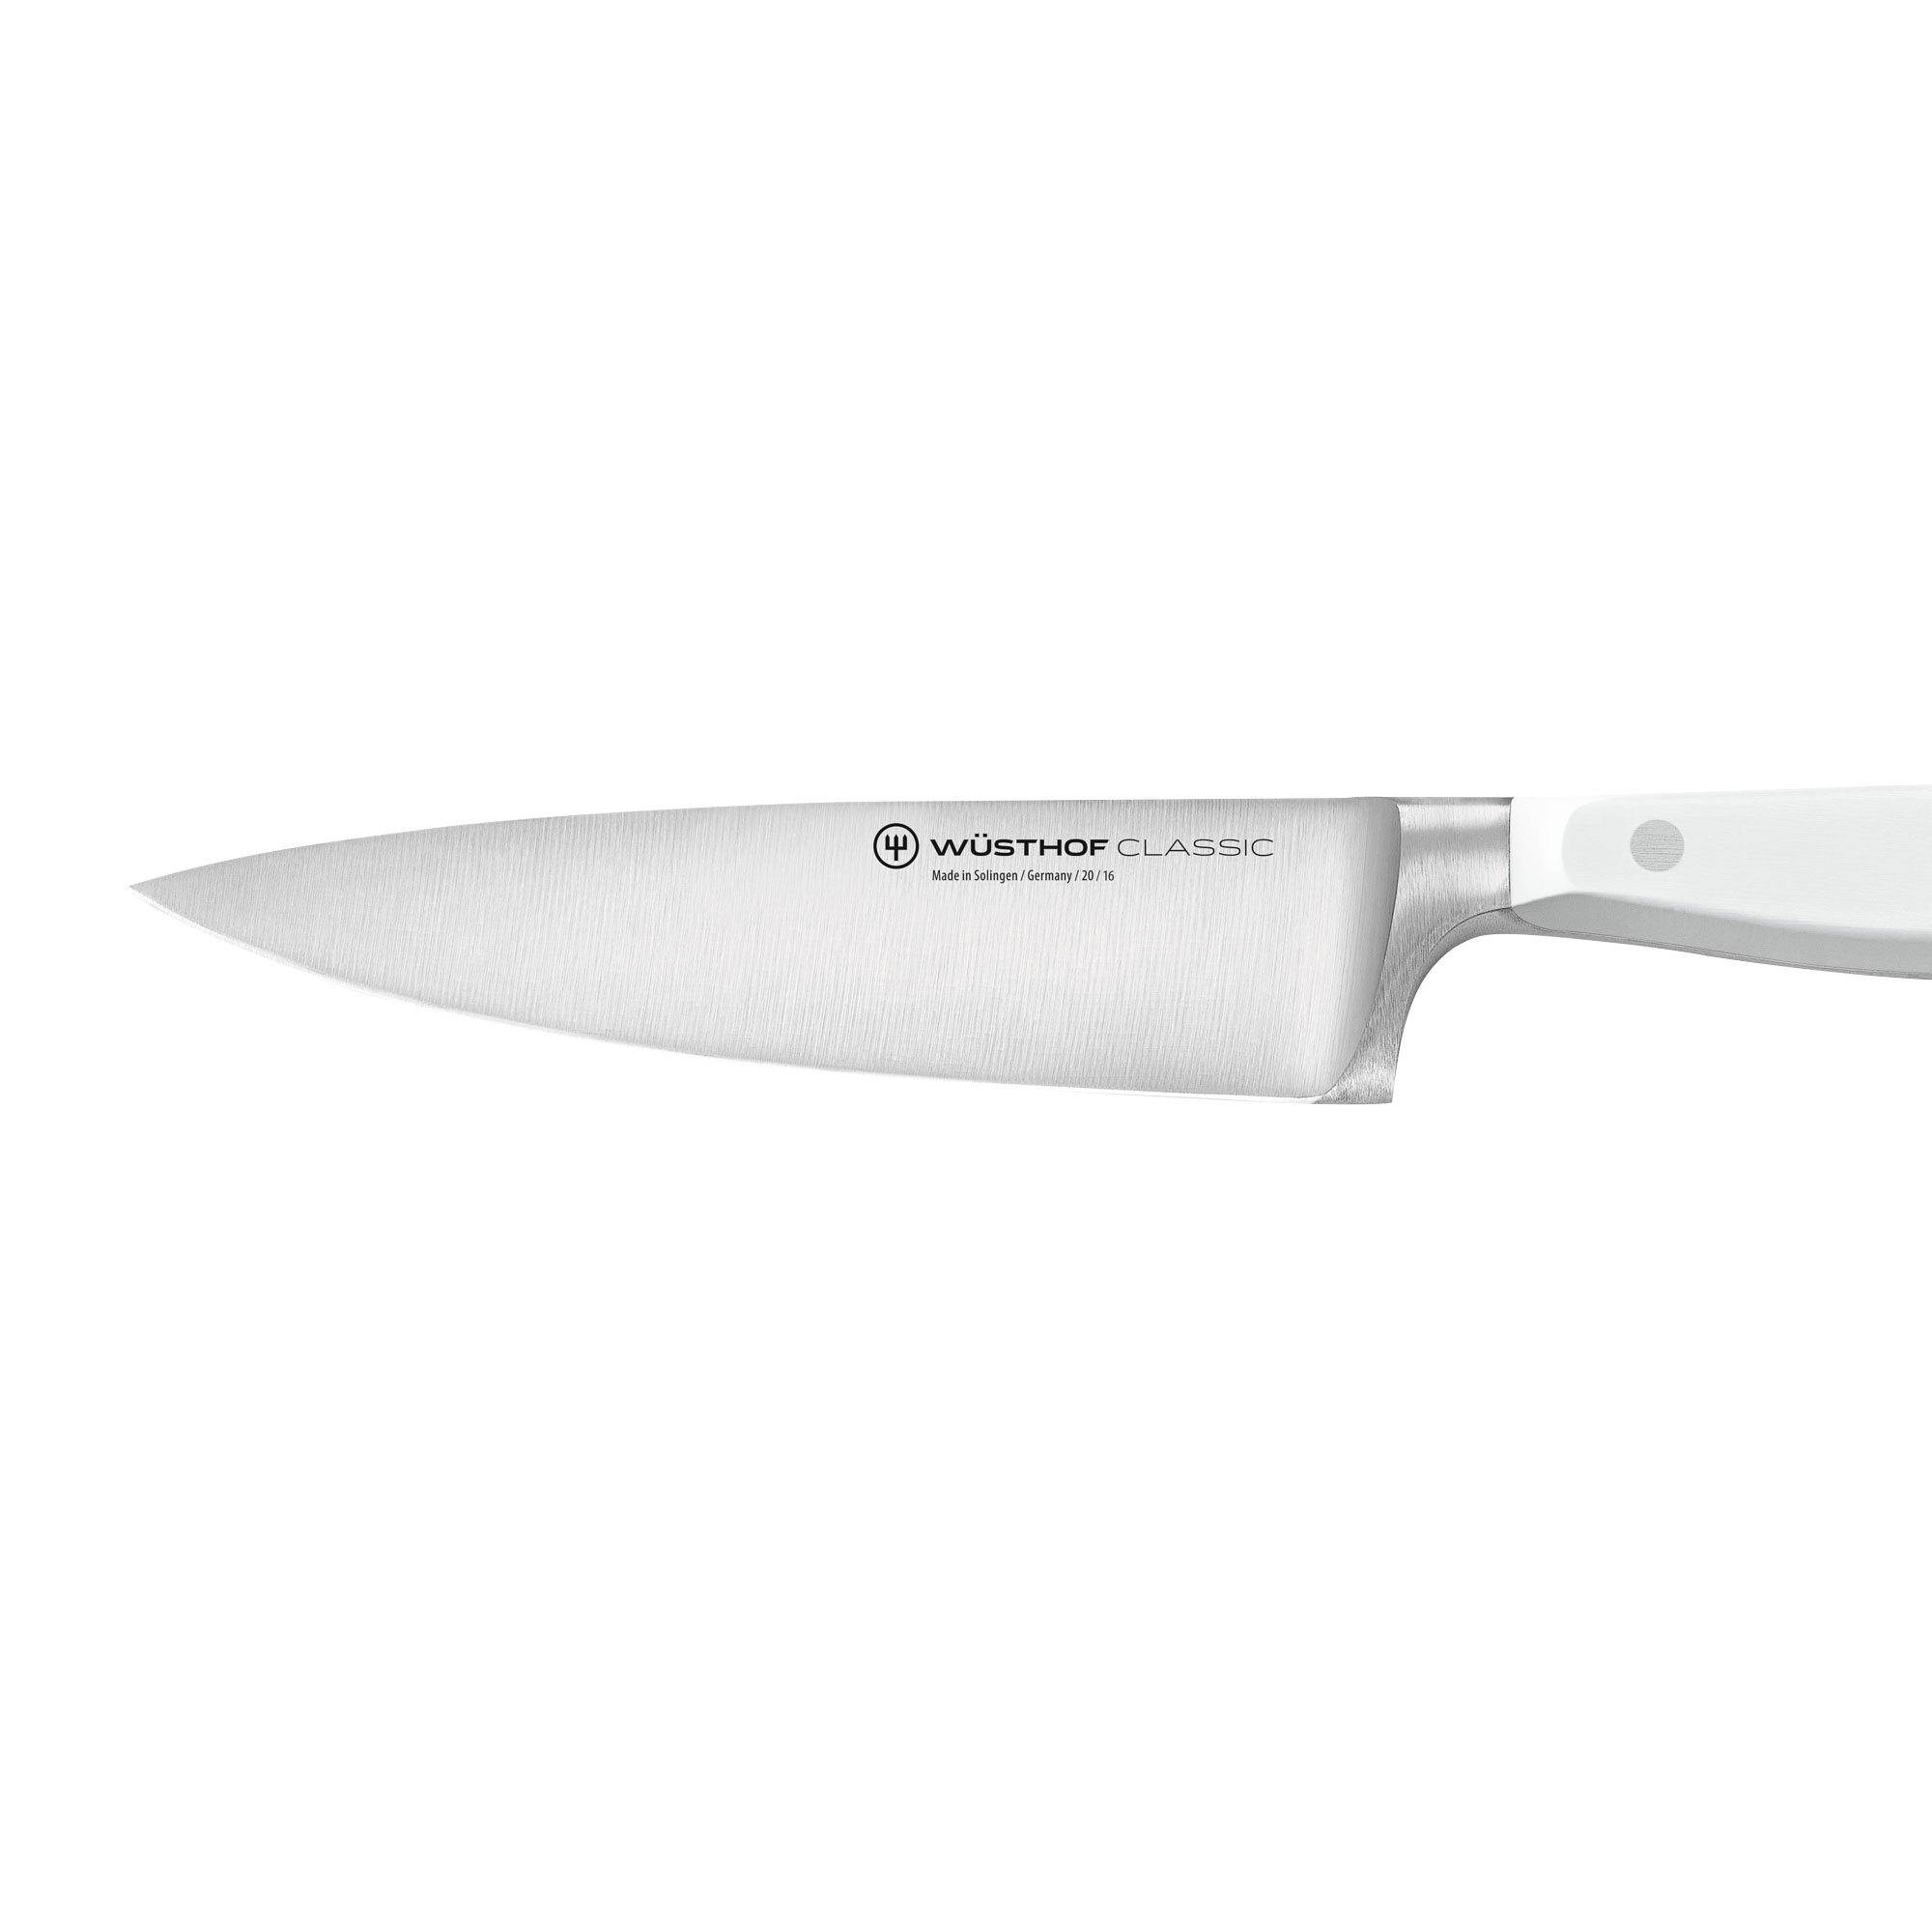 Wusthof Classic White Cook's Knife 16cm Image 2